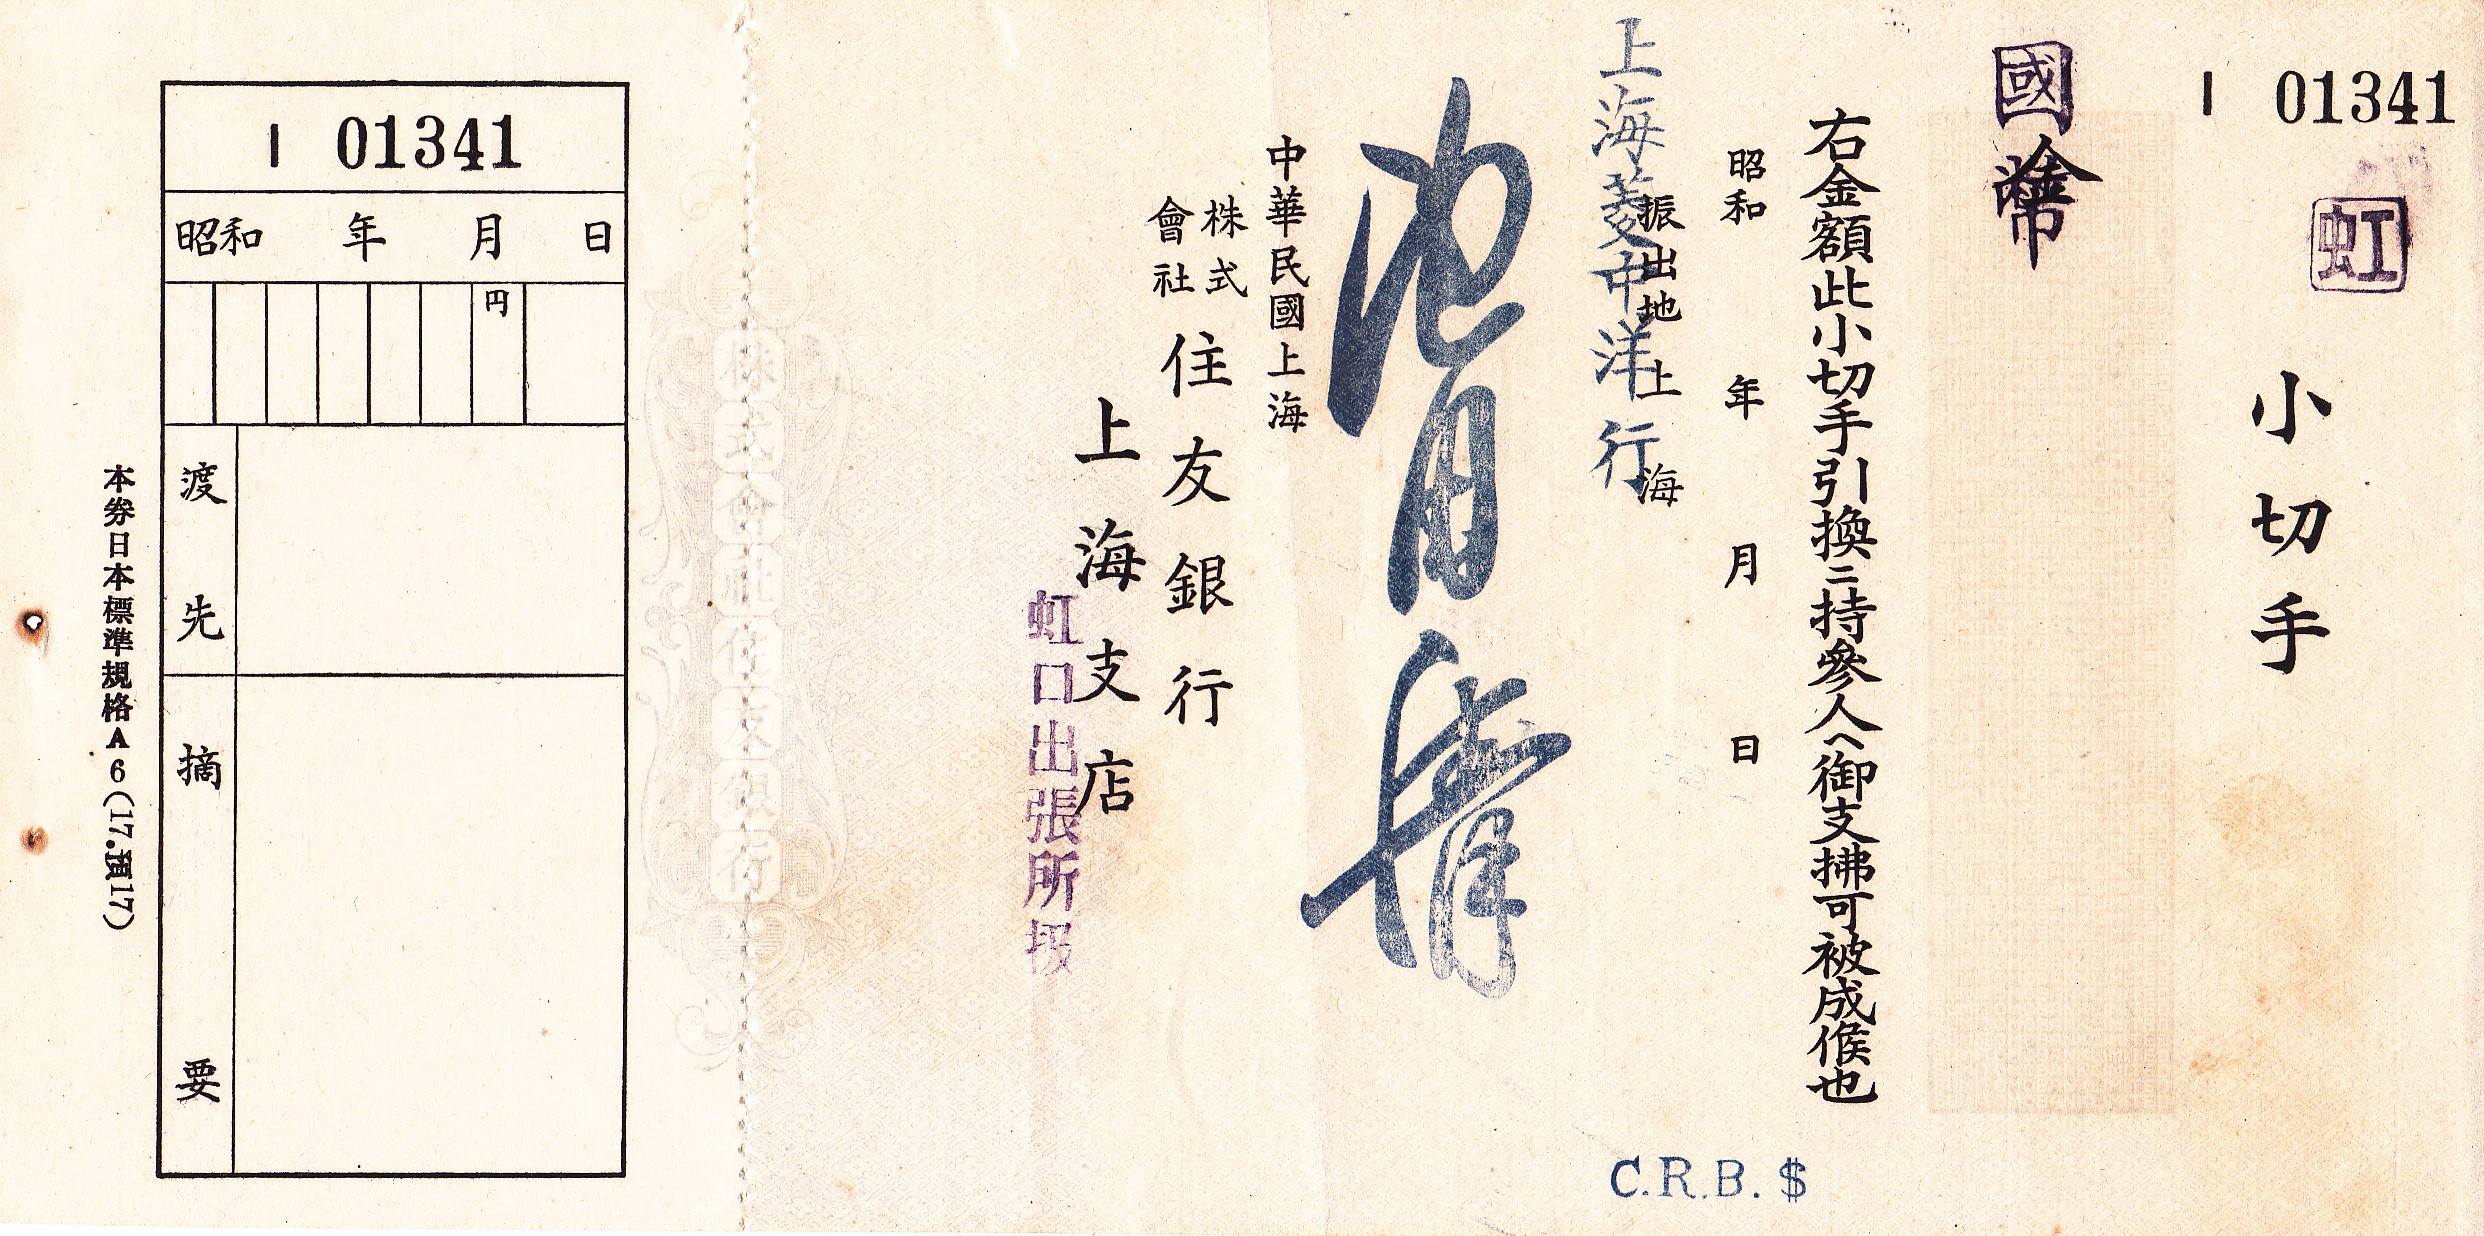 D7060, Check of Sumitomo Bank (Shanghai Branch), Cheque 1940's